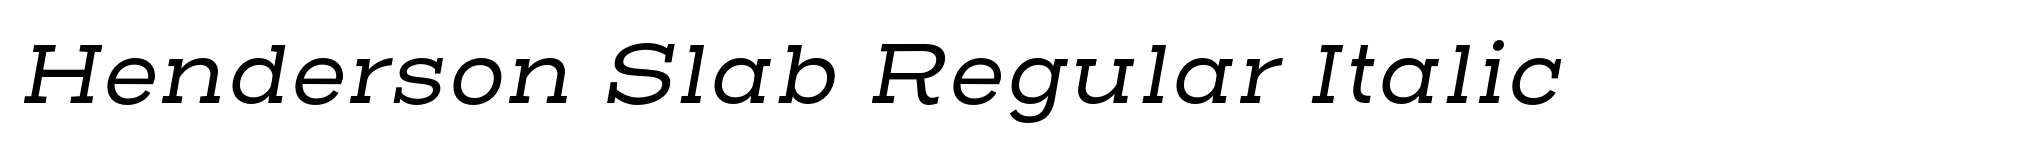 Henderson Slab Regular Italic image